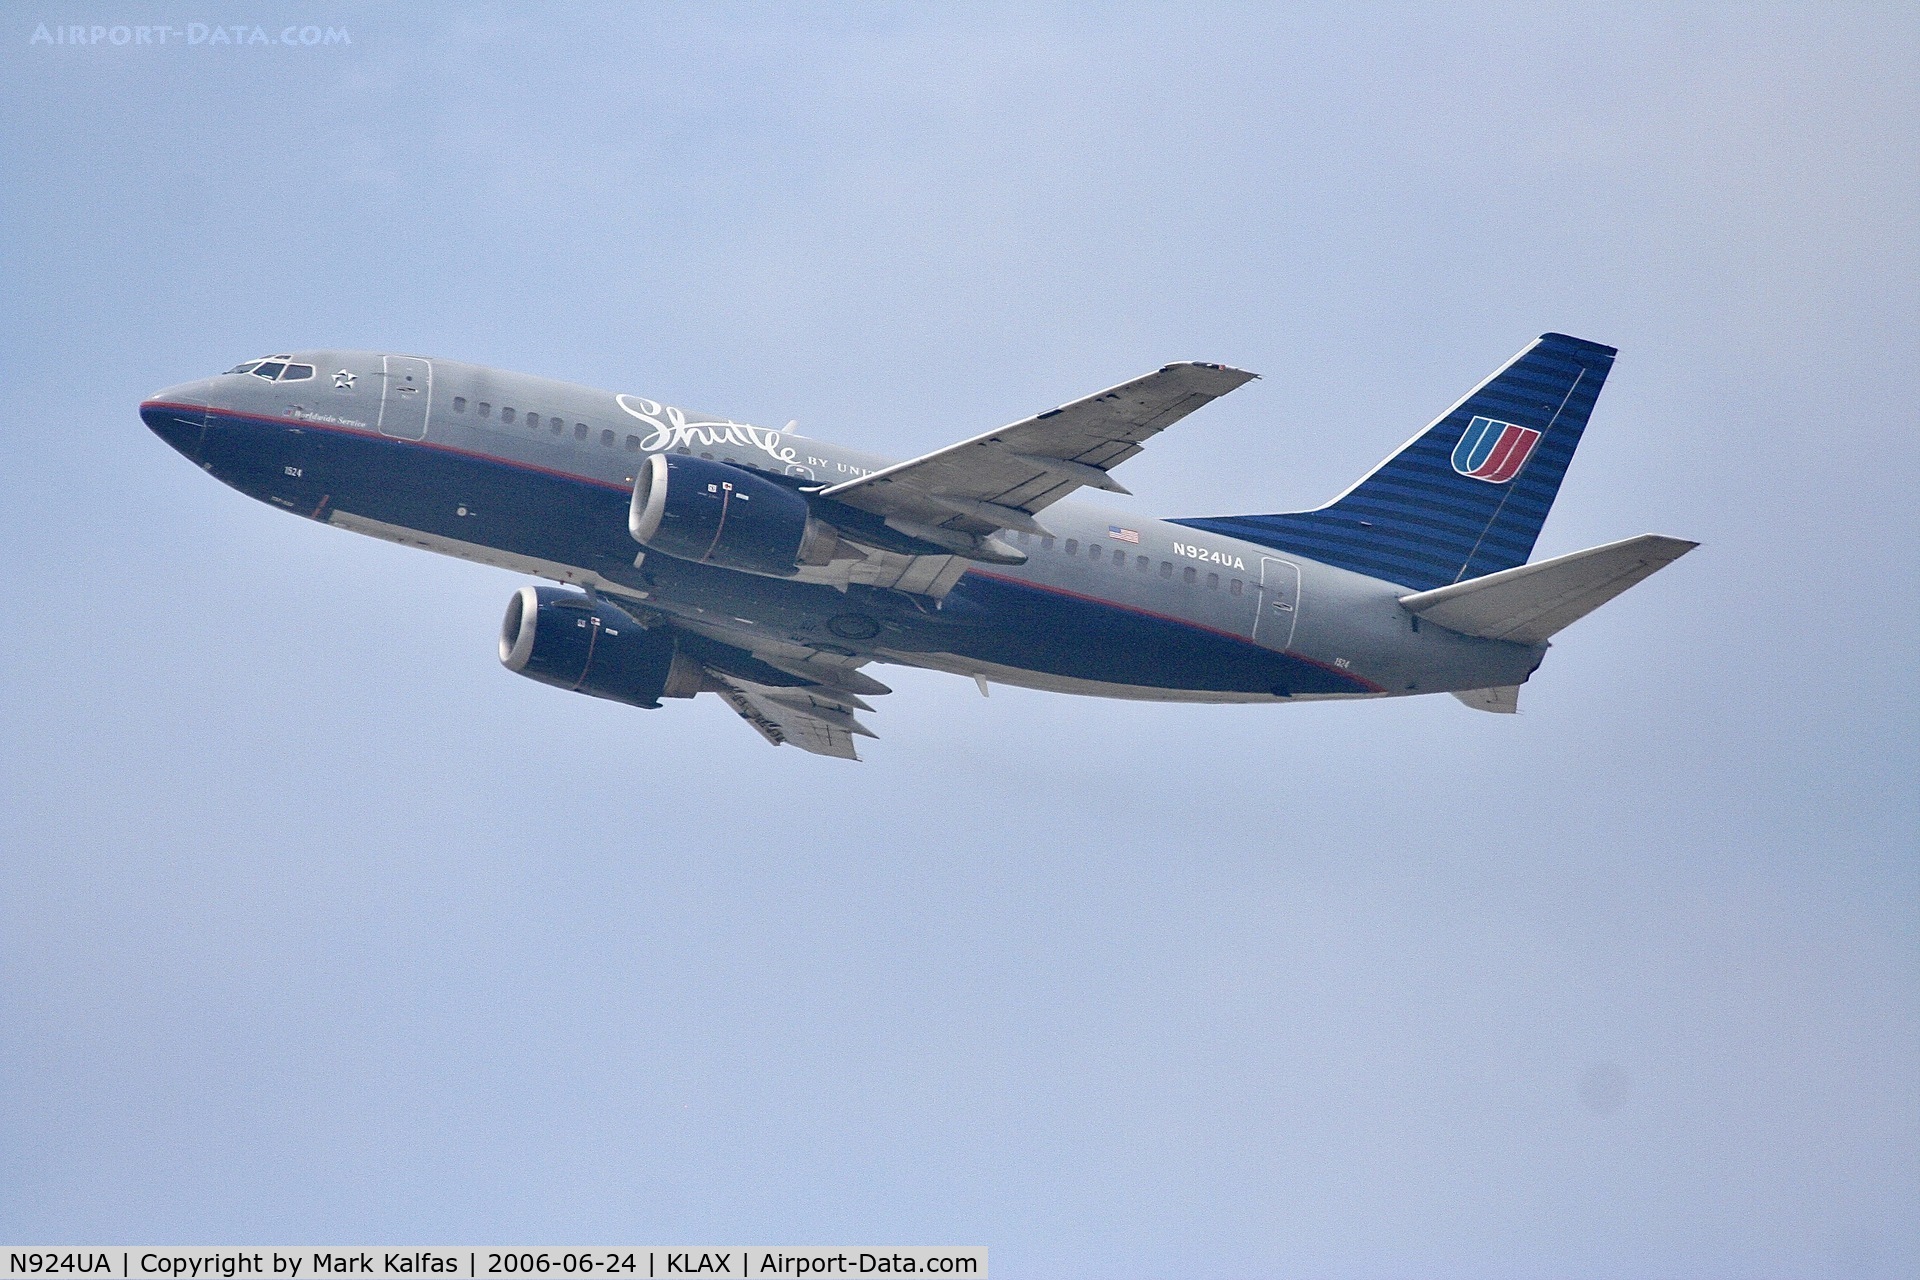 N924UA, 1992 Boeing 737-522 C/N 26645, Shuttle by United Boeing 737-522, N924UA departing 25R